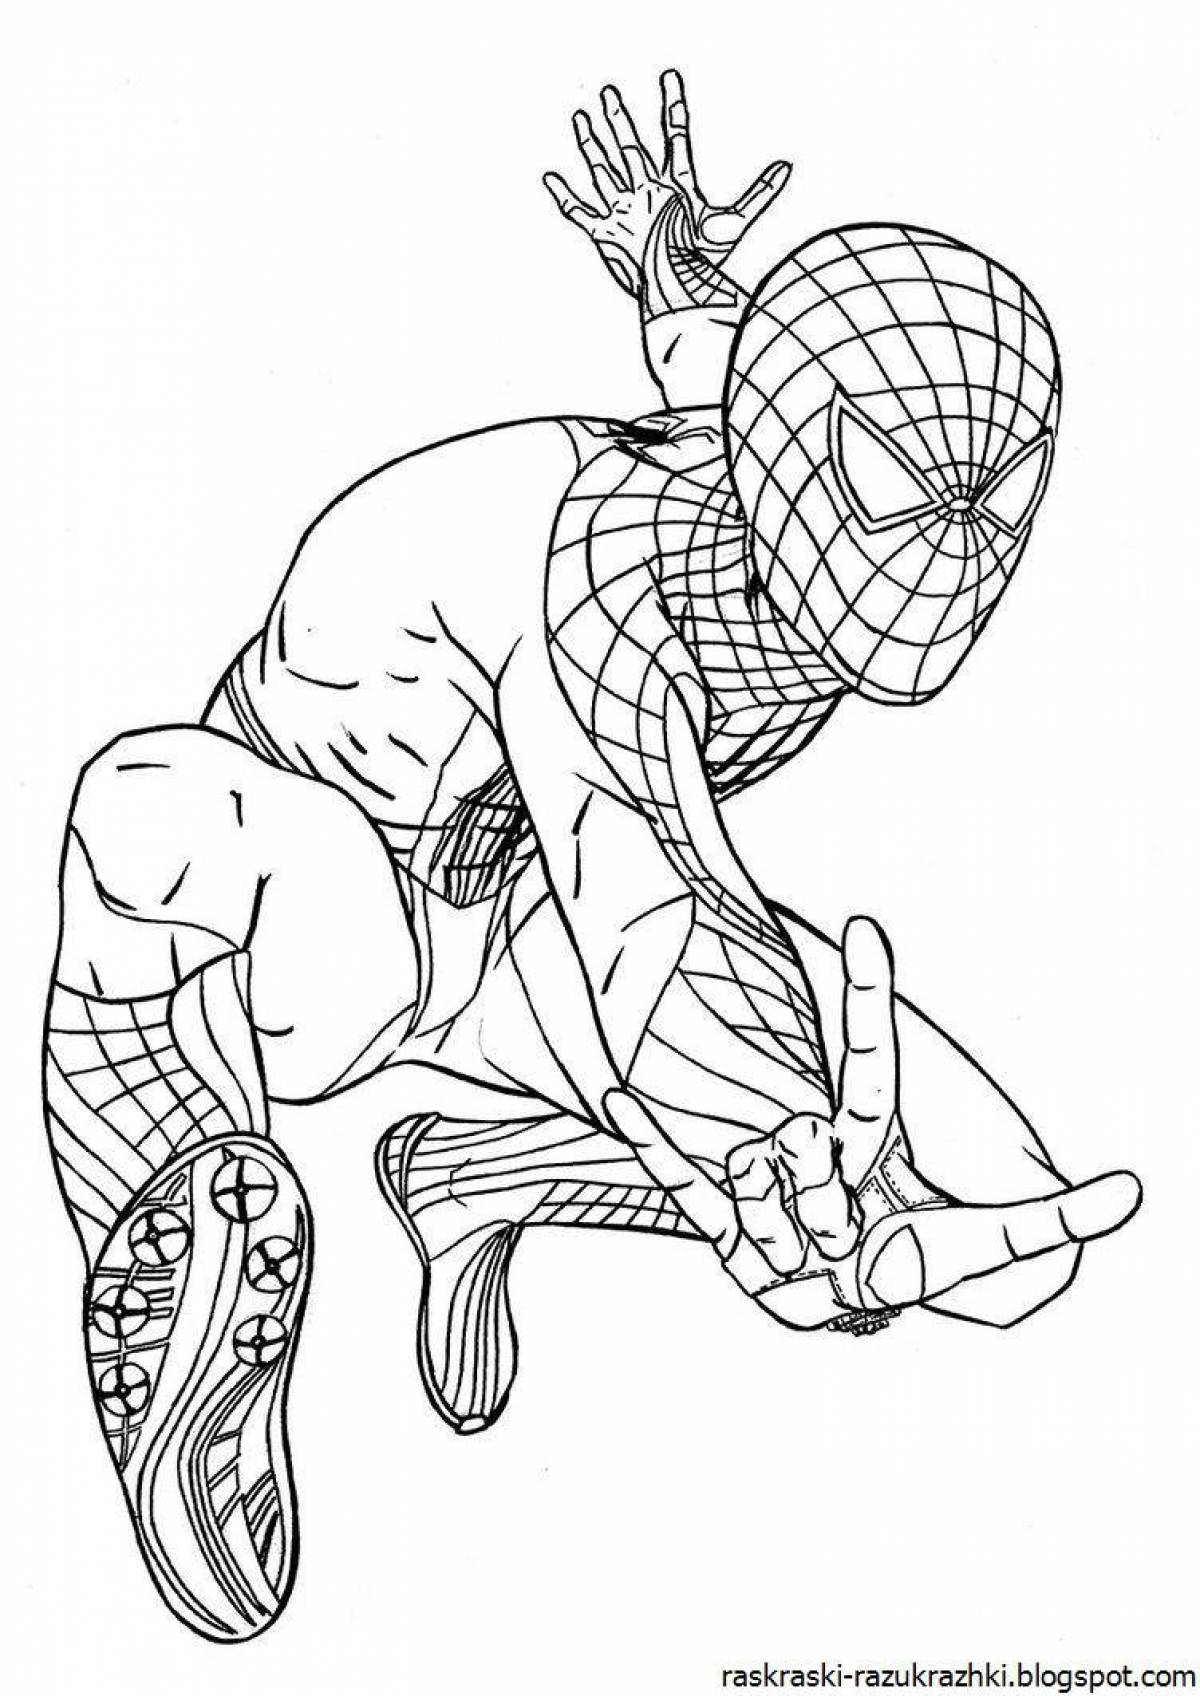 Spider-man wonderful coloring book